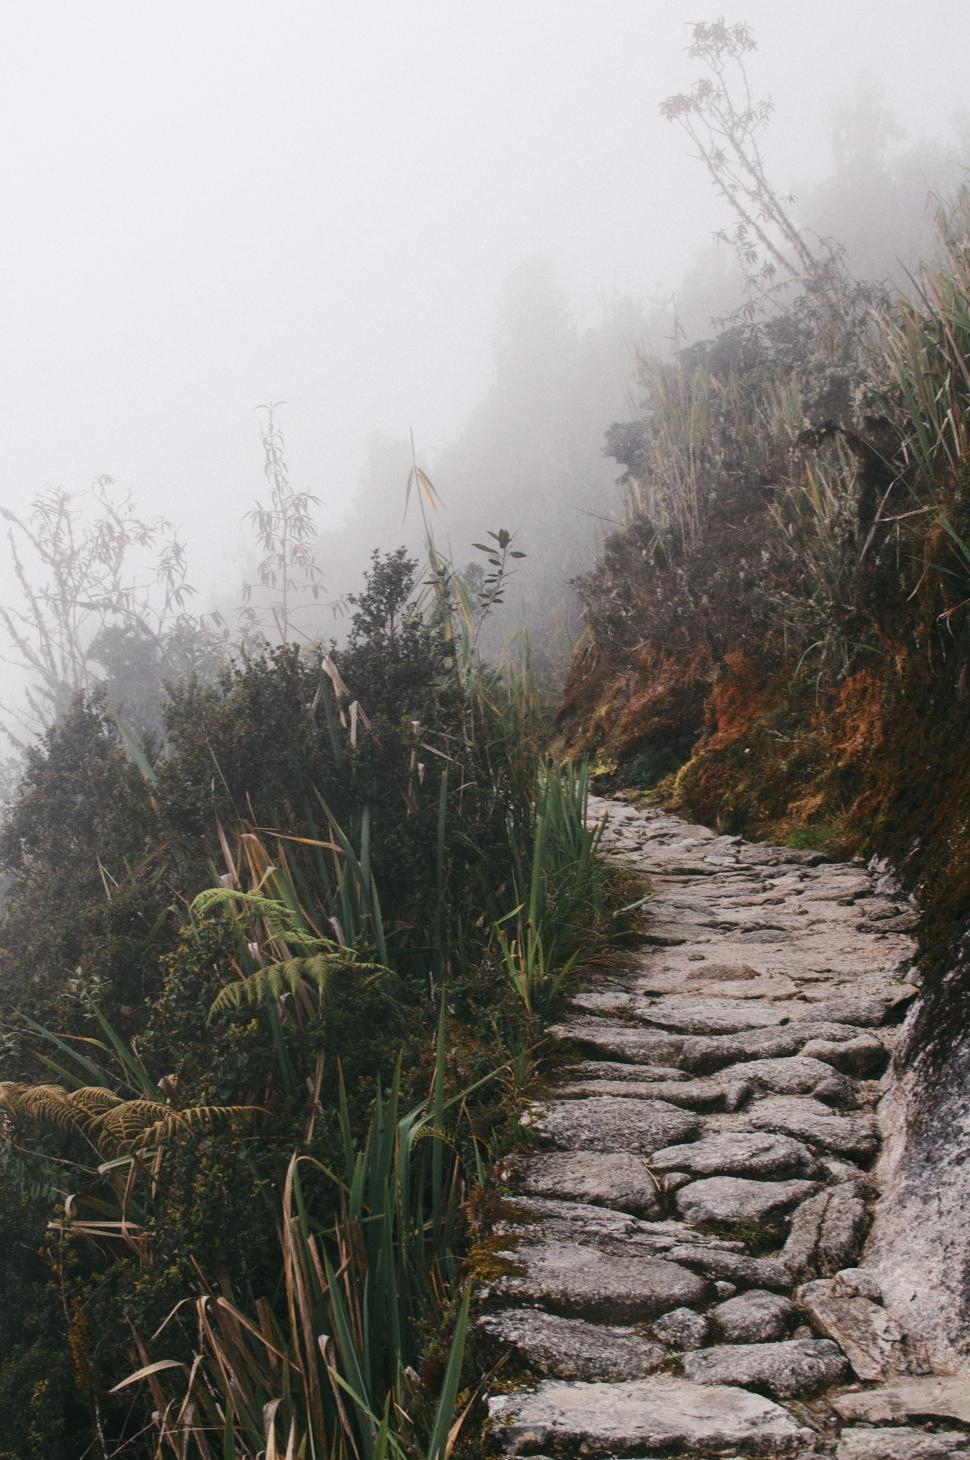 Free Image of Stone Path Amidst Foggy Mountain 